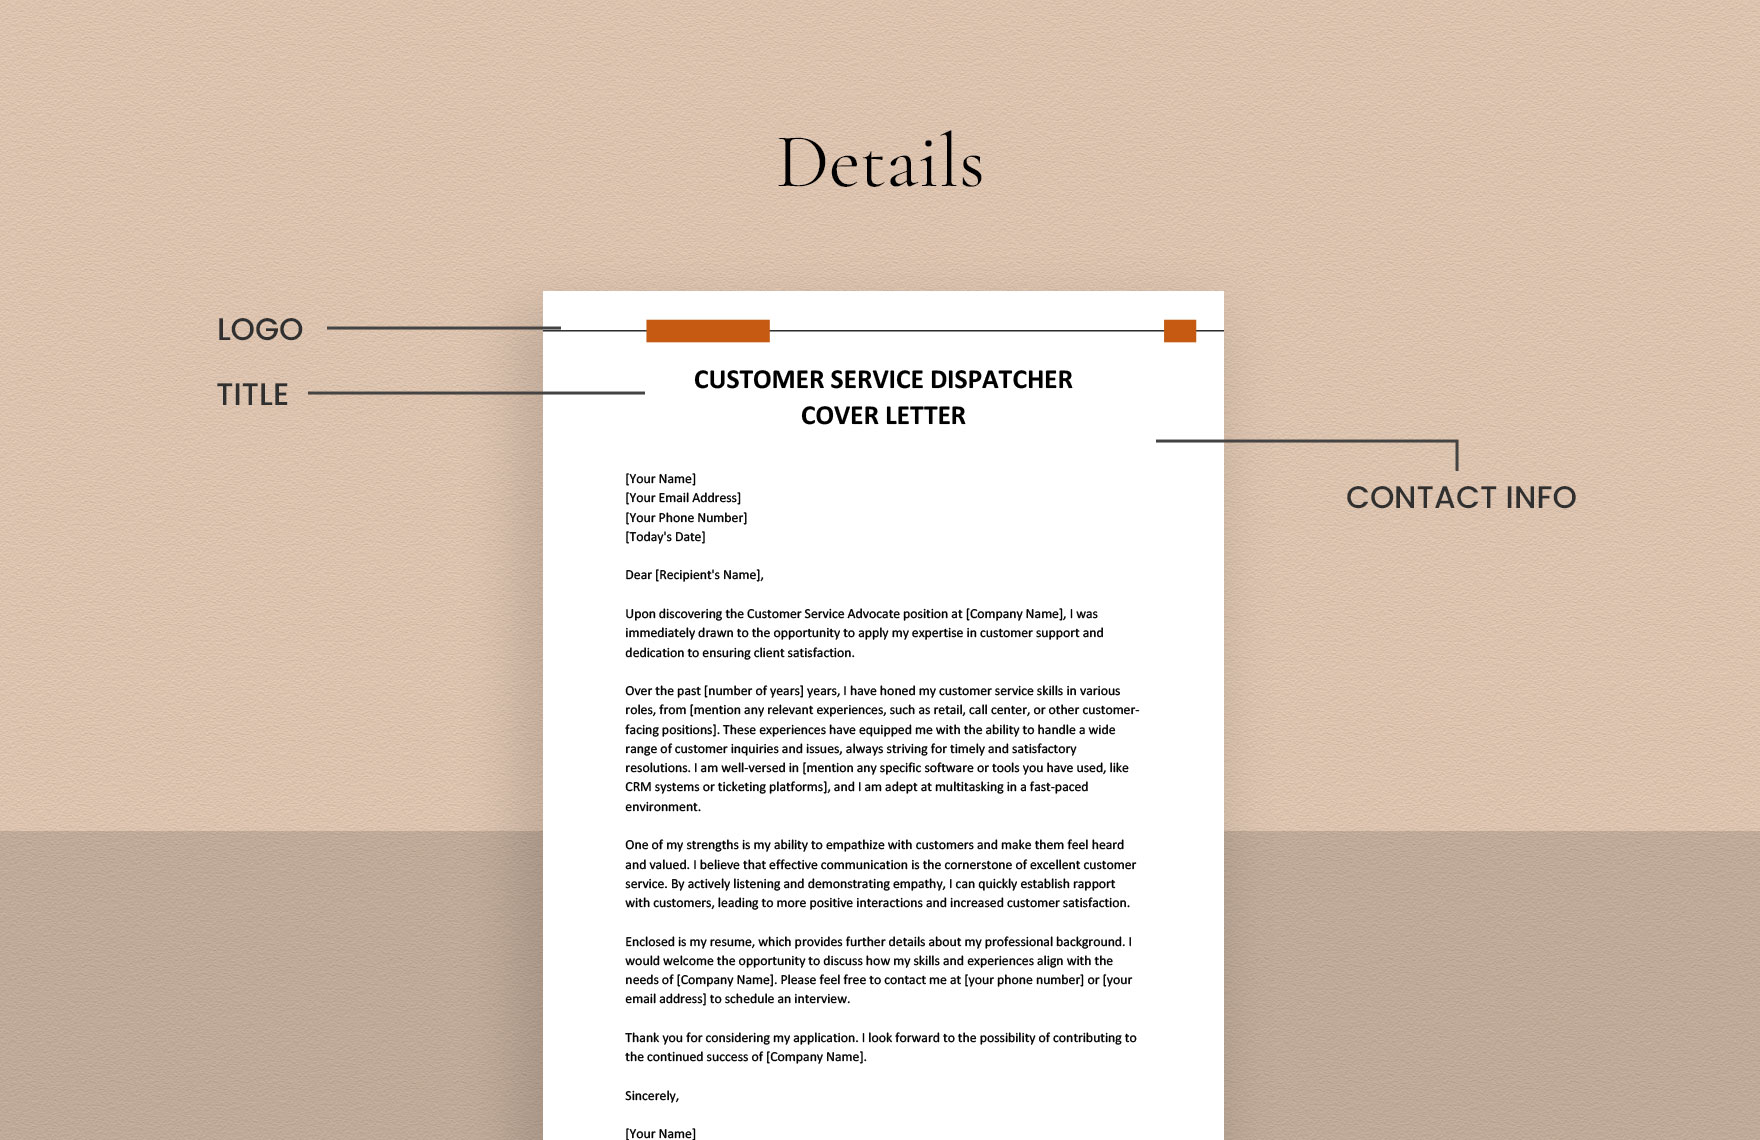 Customer Service Dispatcher Cover Letter